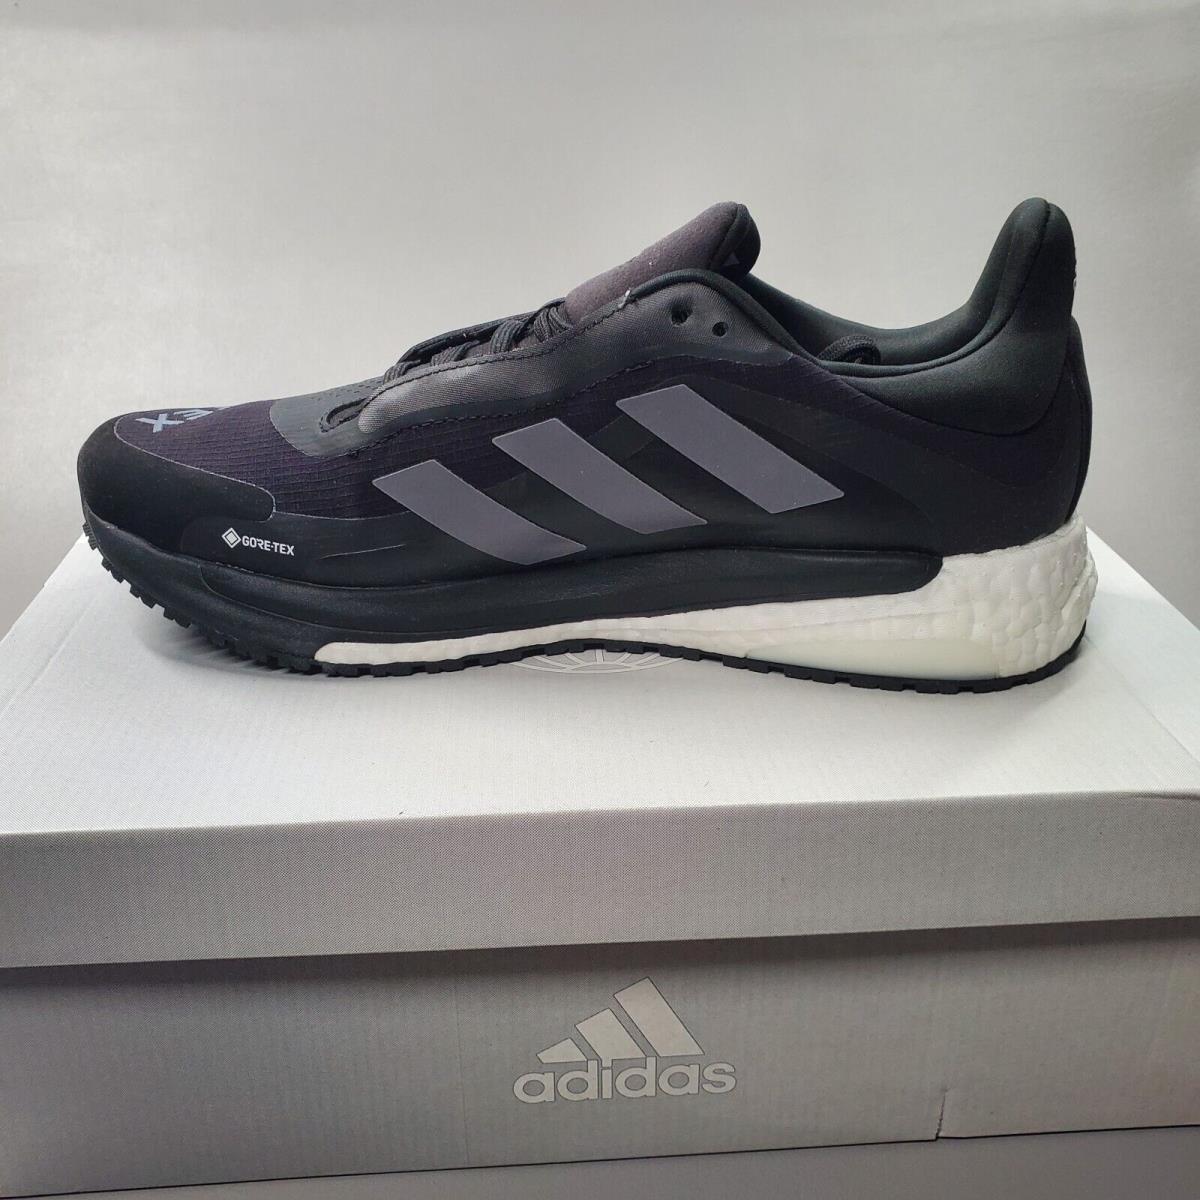 Adidas shoes Solar Glide - Black 4